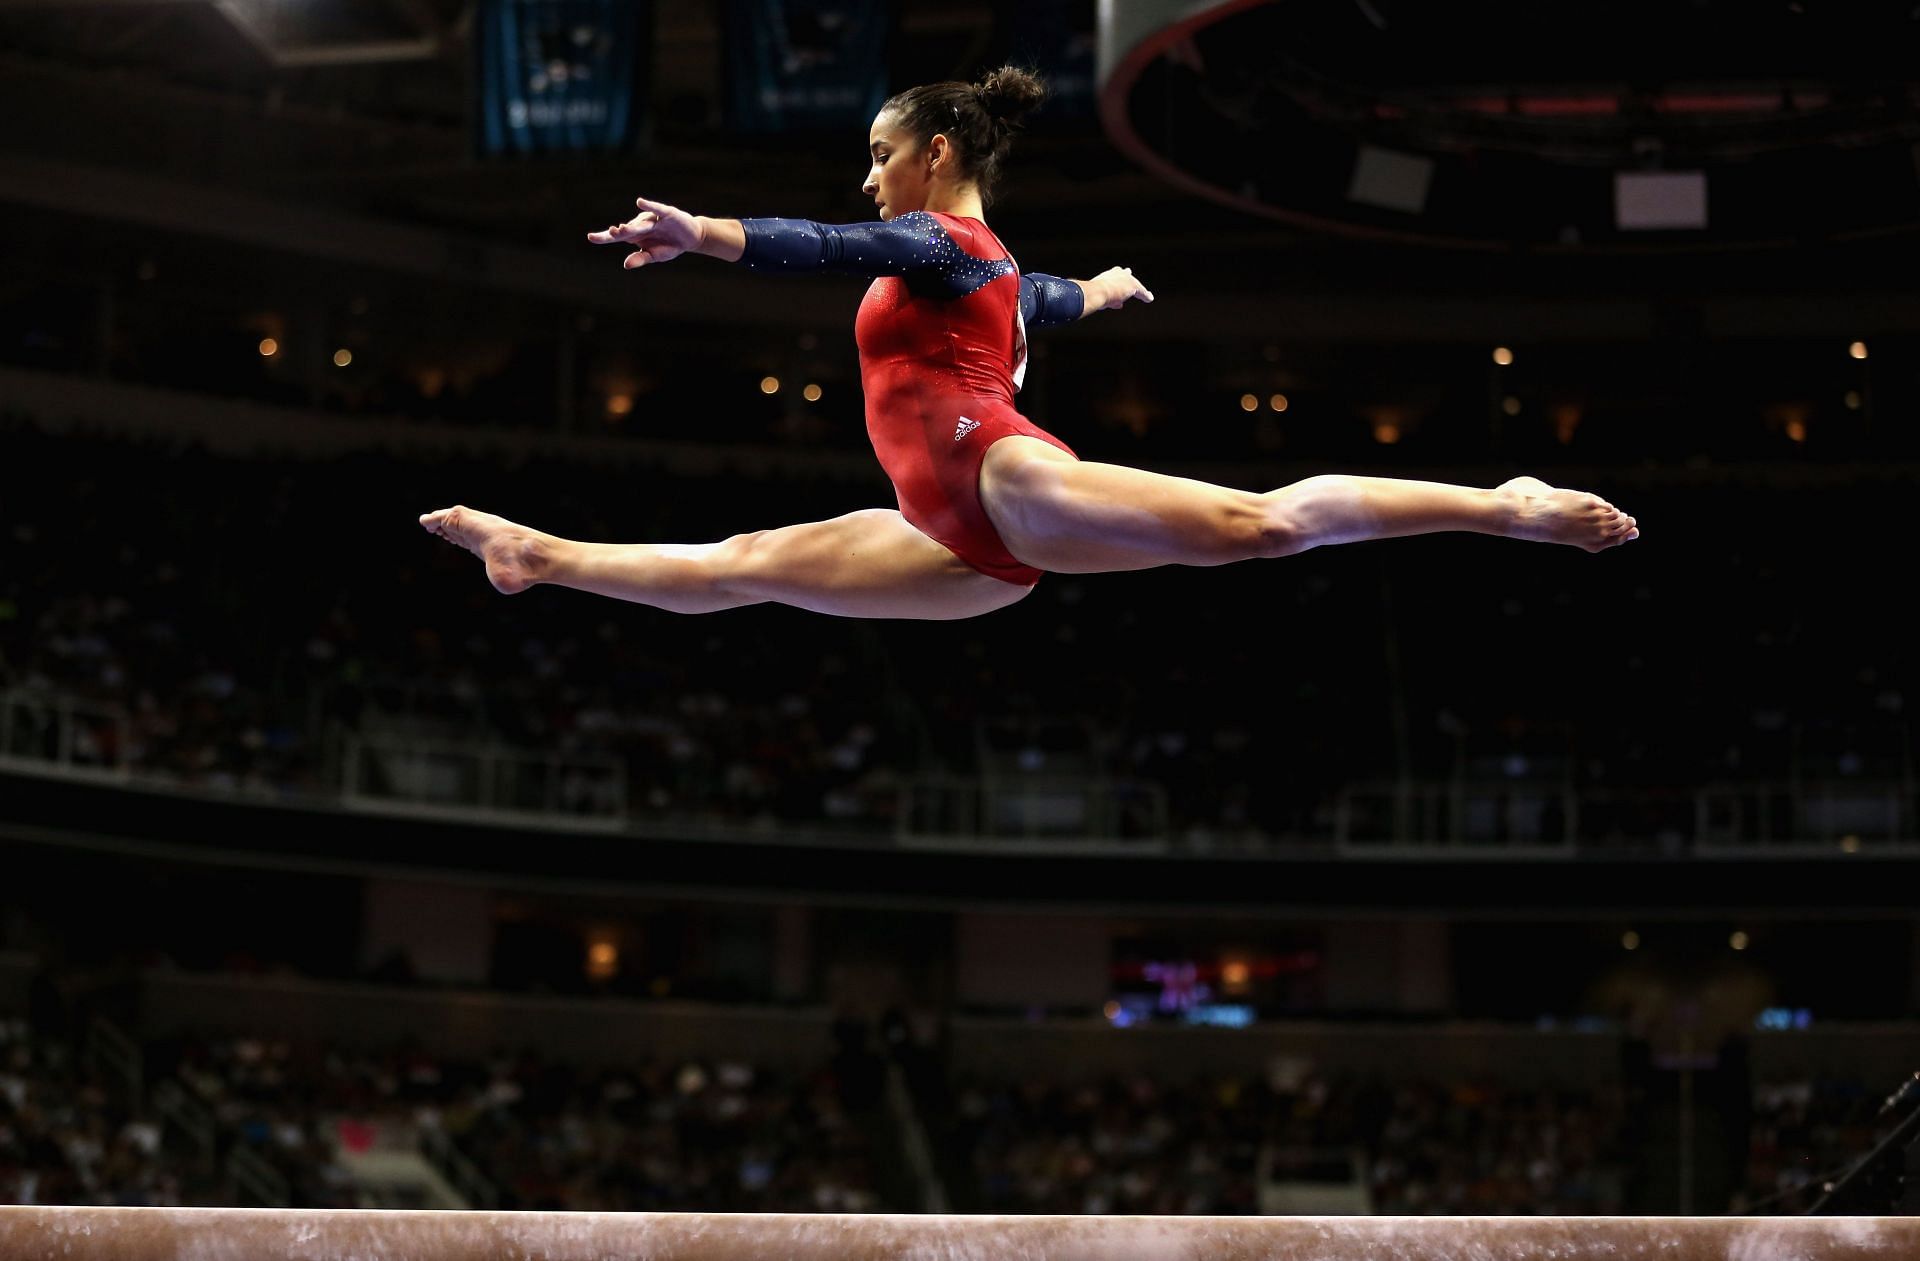 2012 U.S. Olympic Gymnastics Team Trials - Aly Raisman in action